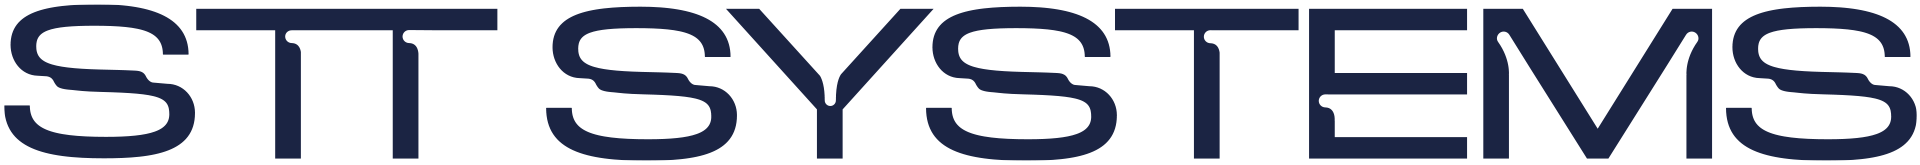 prophysics - Logo STT Systems